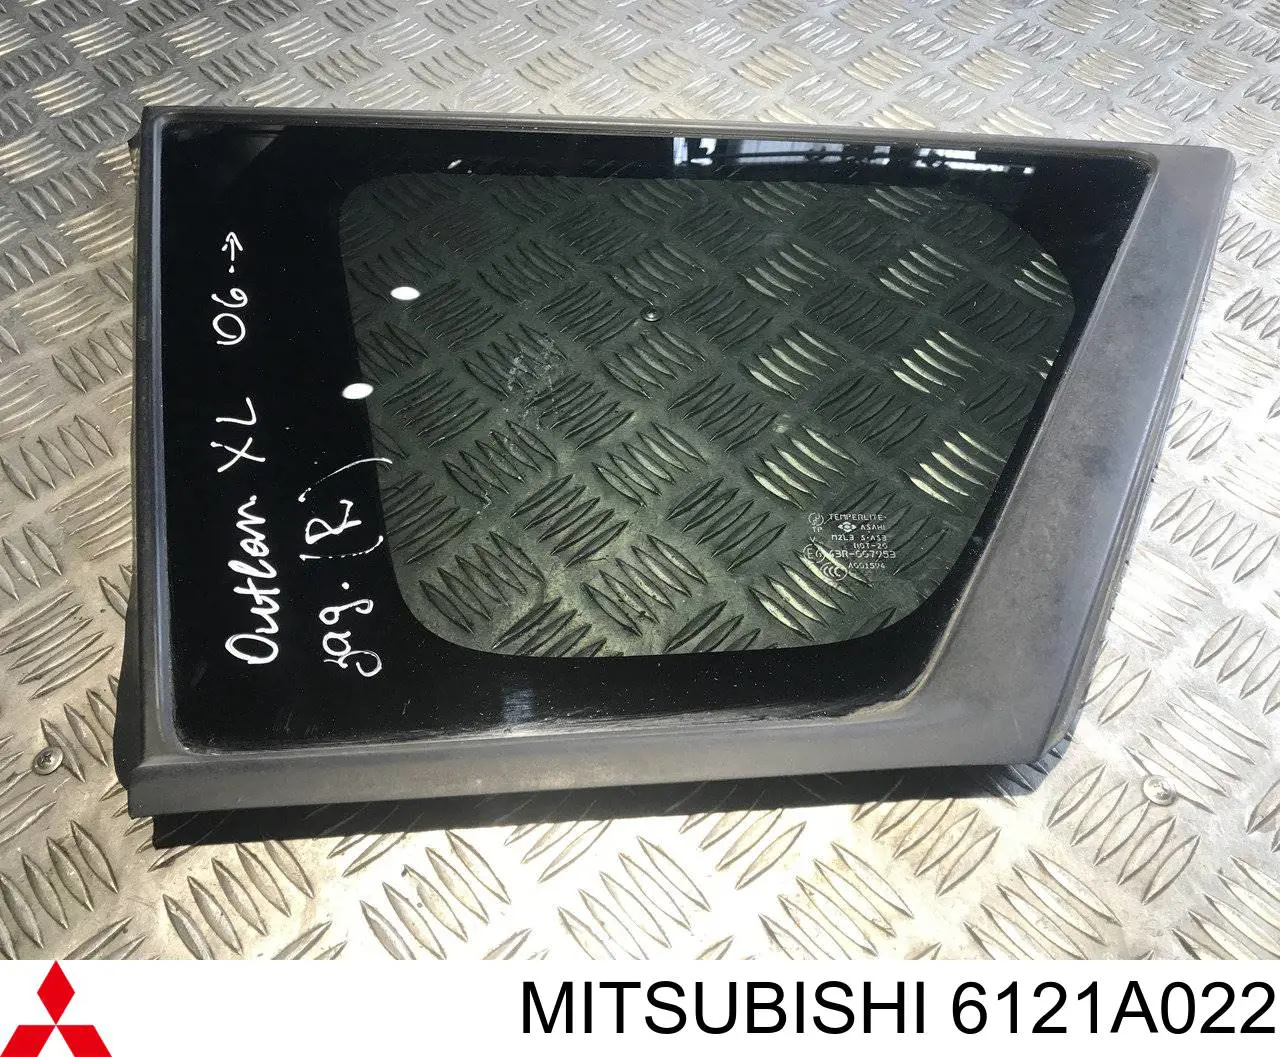 6121A022 Mitsubishi ventanilla costado superior derecha (lado maletero)